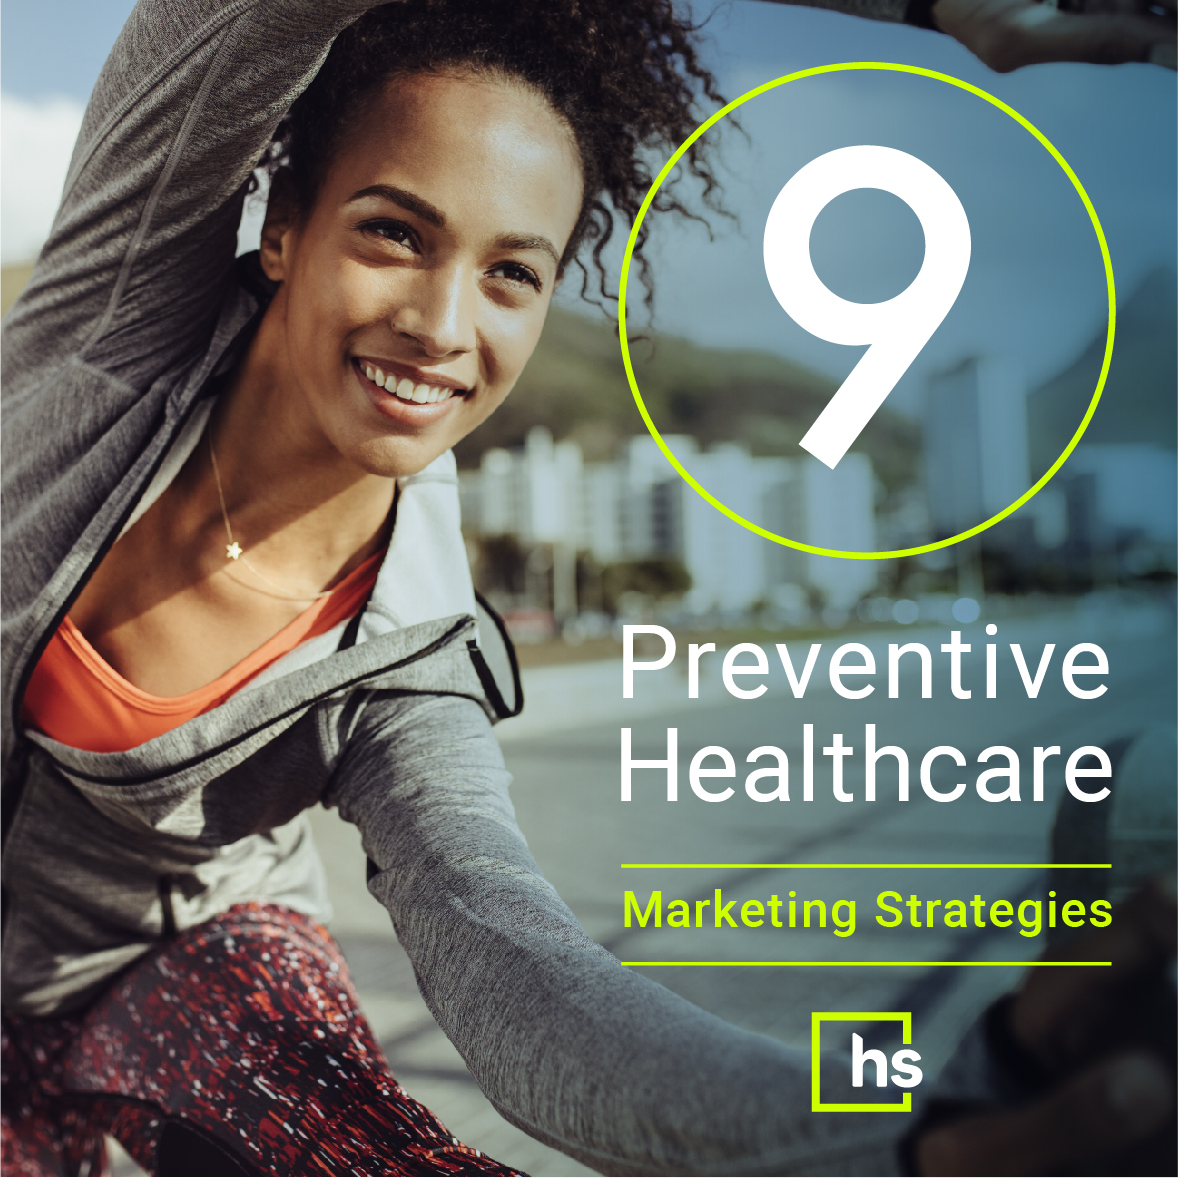 9 Preventive Healthcare Marketing Strategies